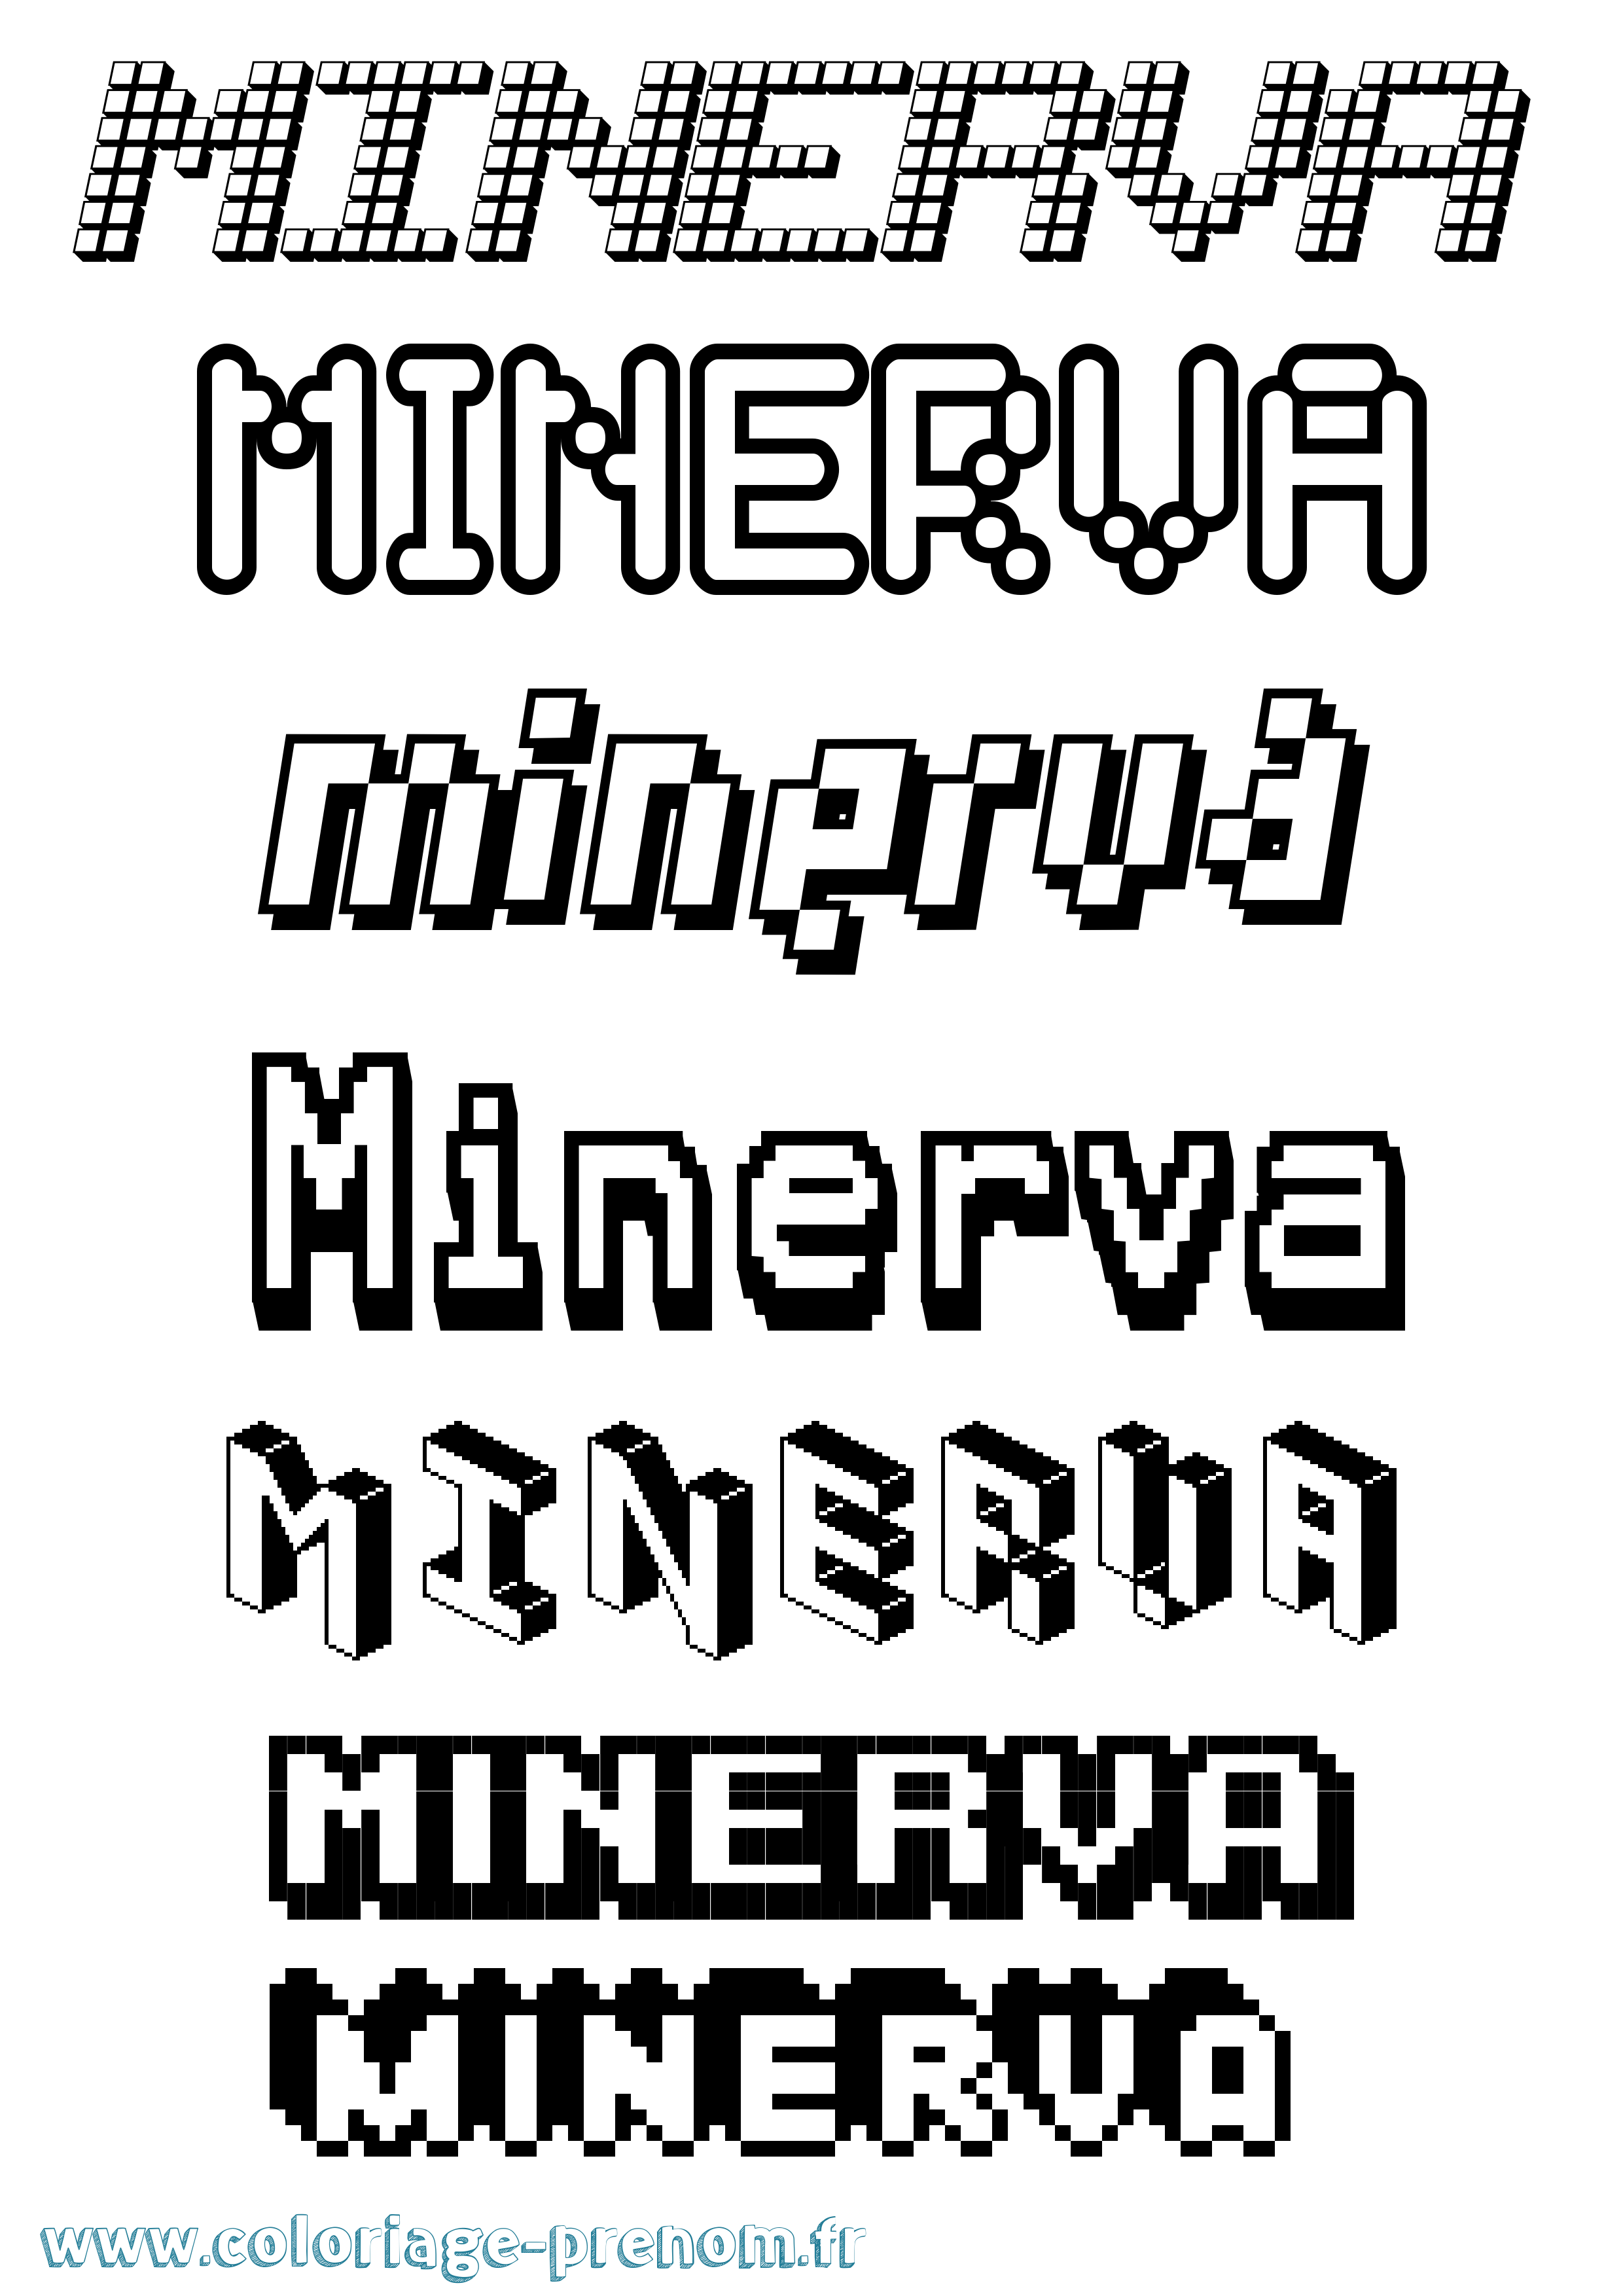 Coloriage prénom Minerva Pixel